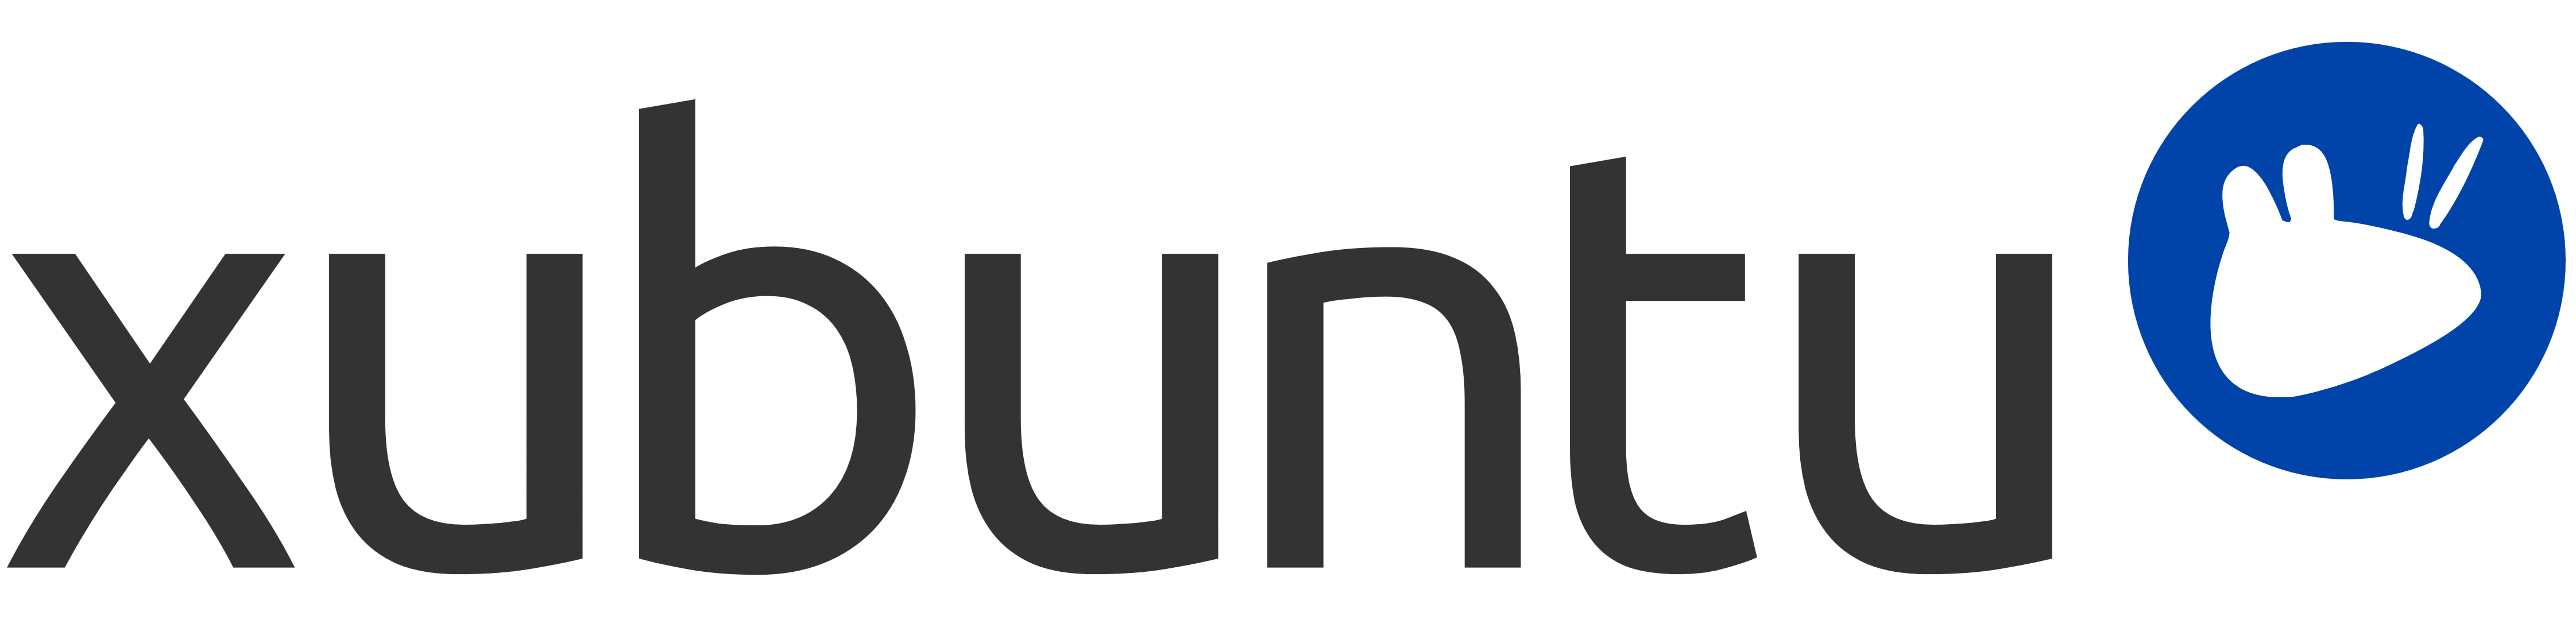 Xubuntu logo, logotype